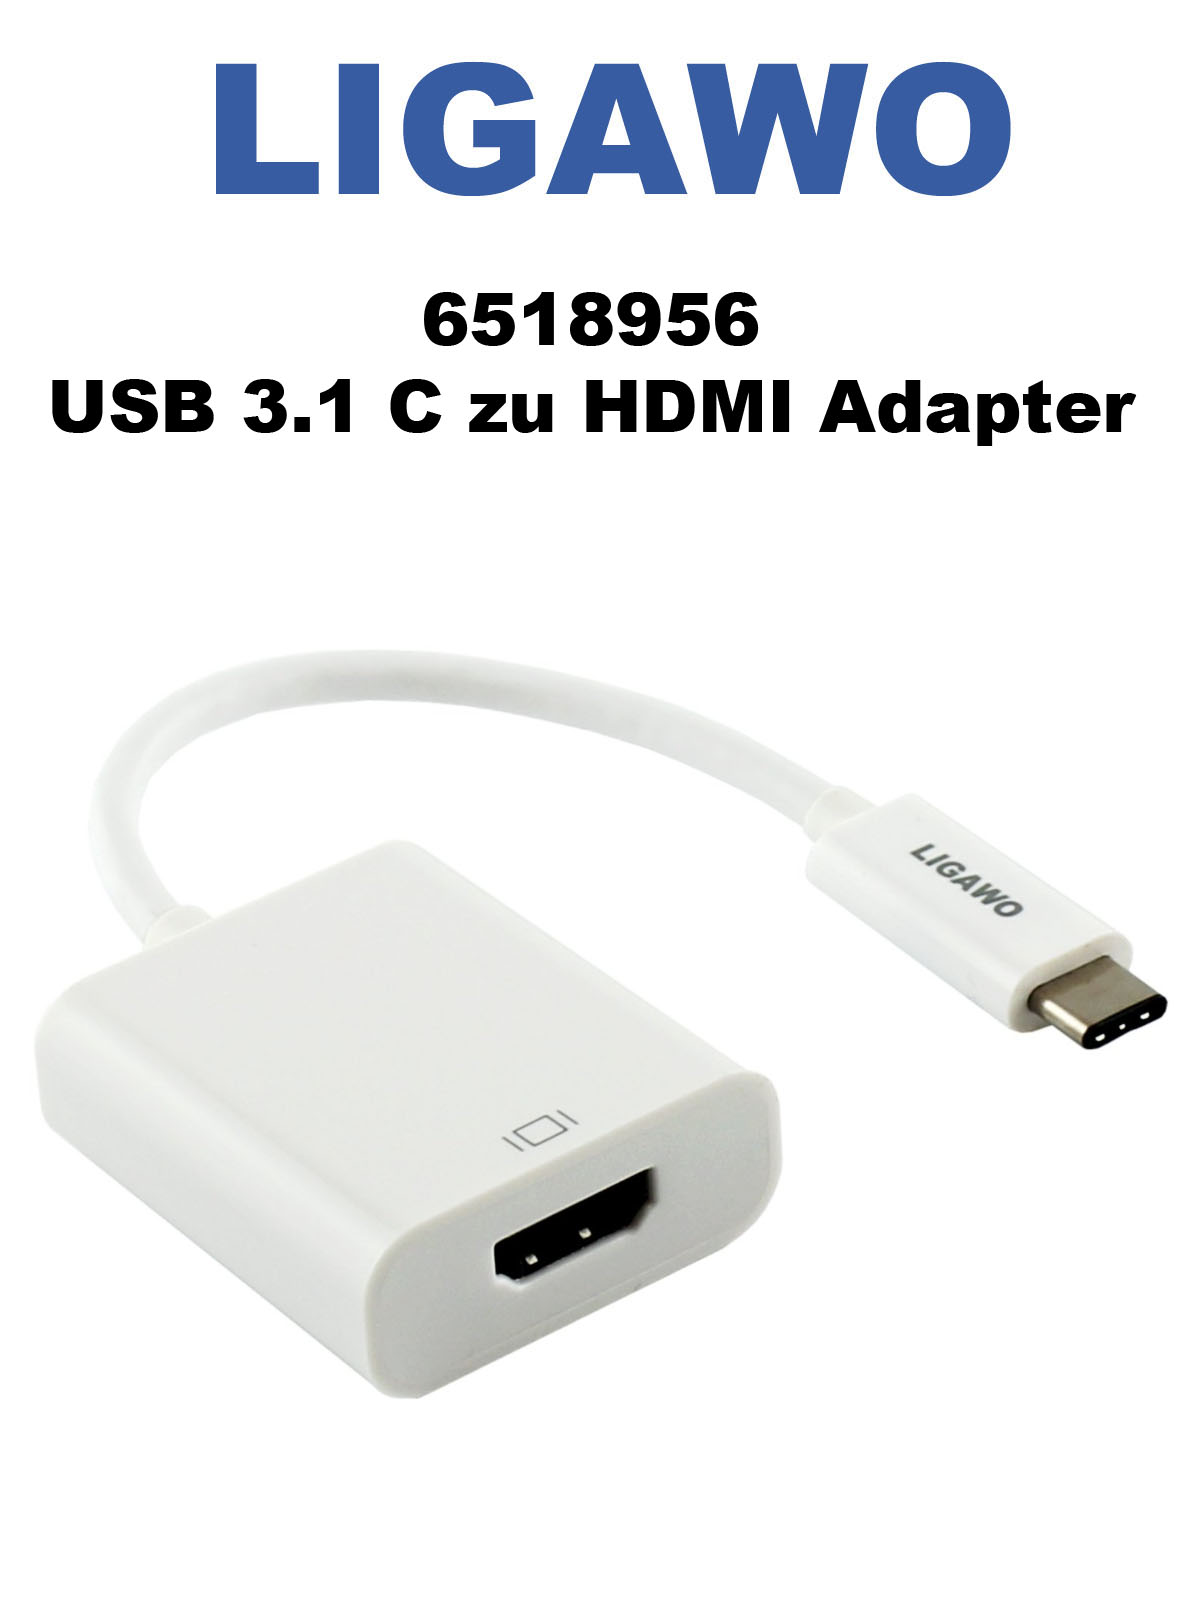 Ligawo 6518956 USB 3.1 C zu HDMI Adapter